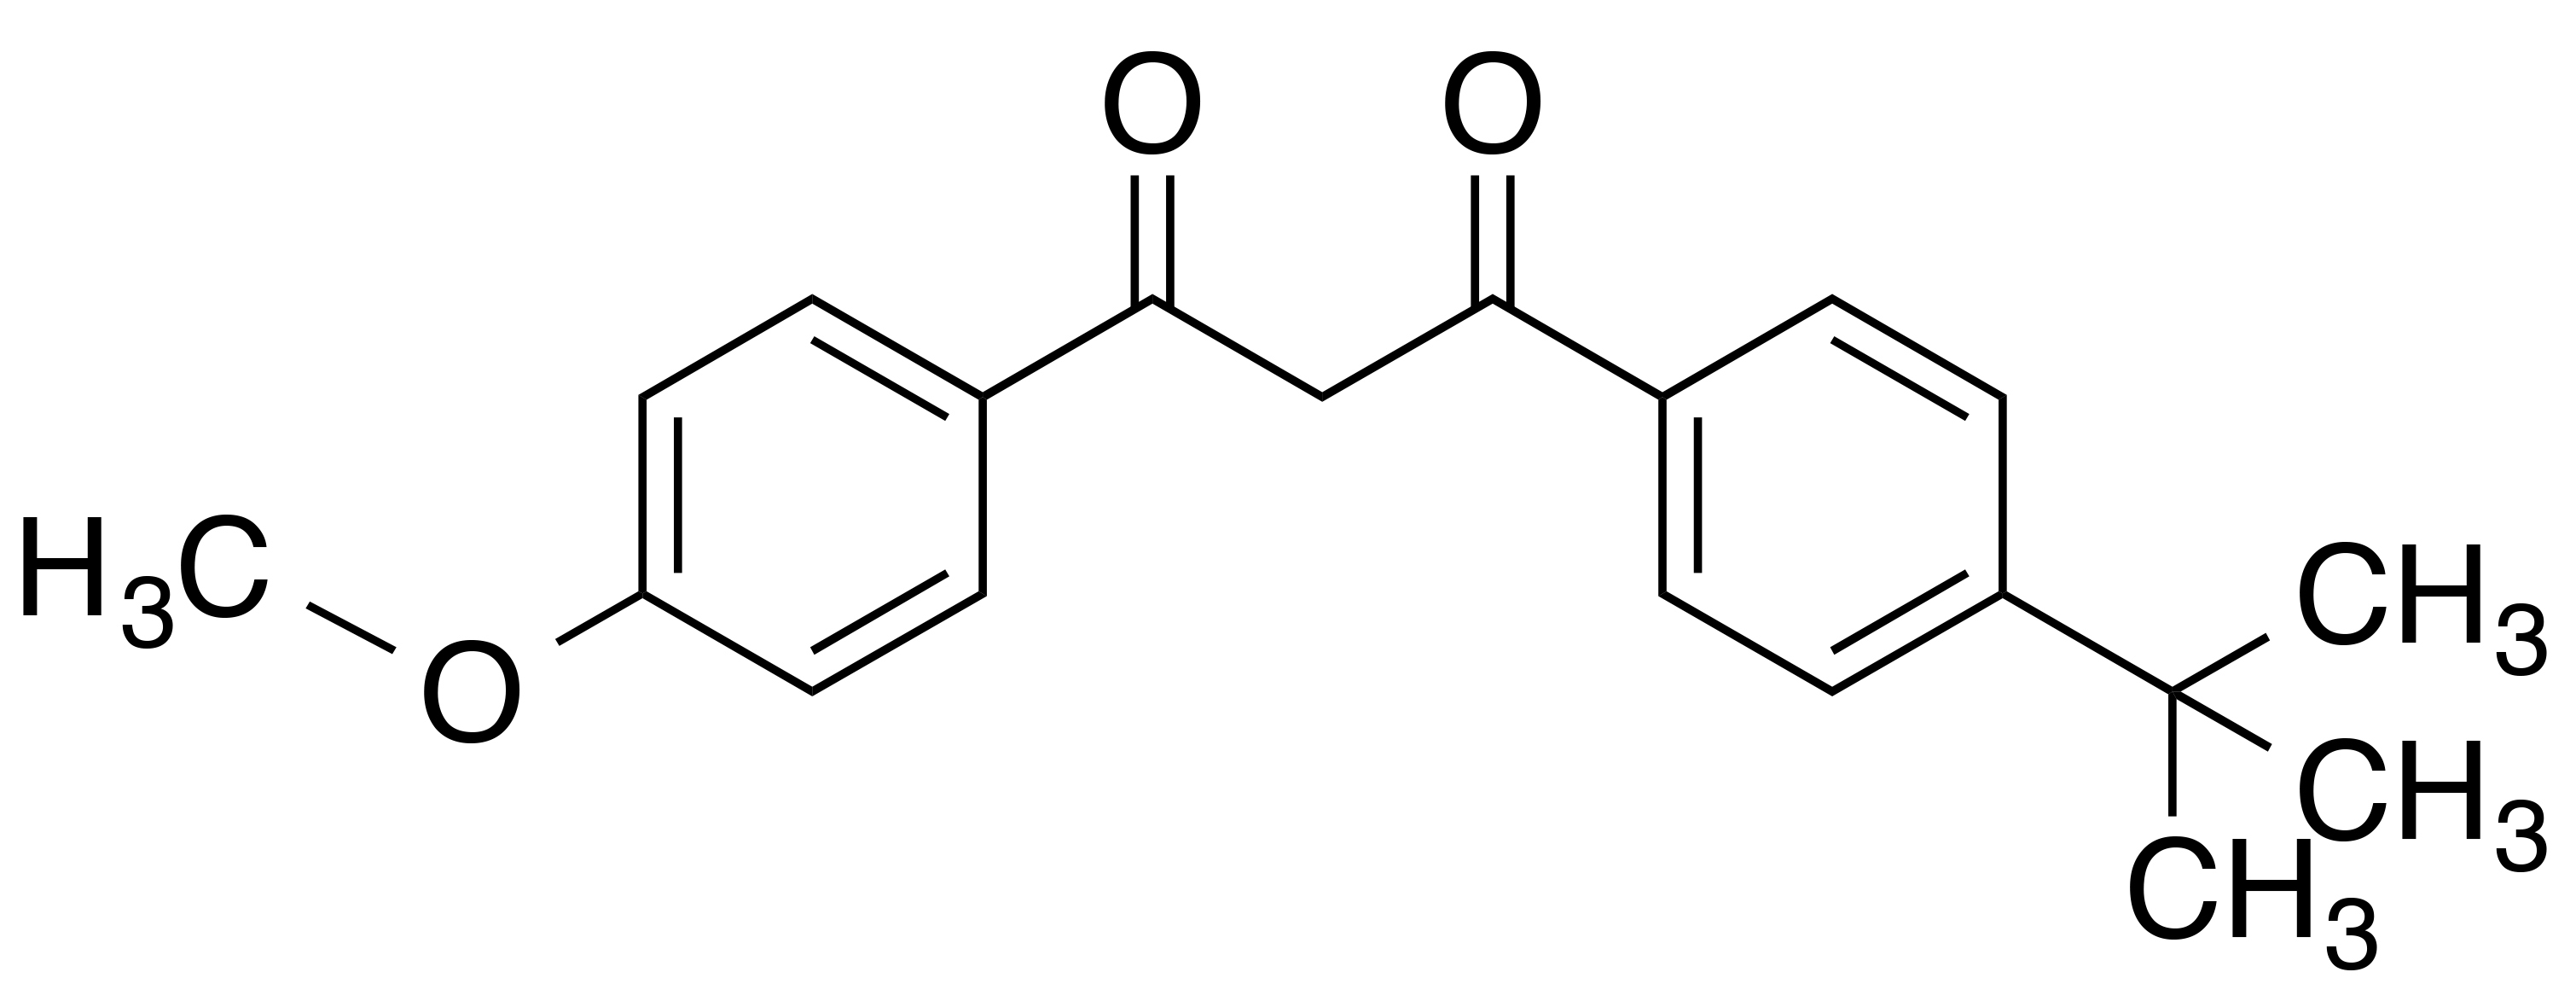 molecular structure of avobenzone